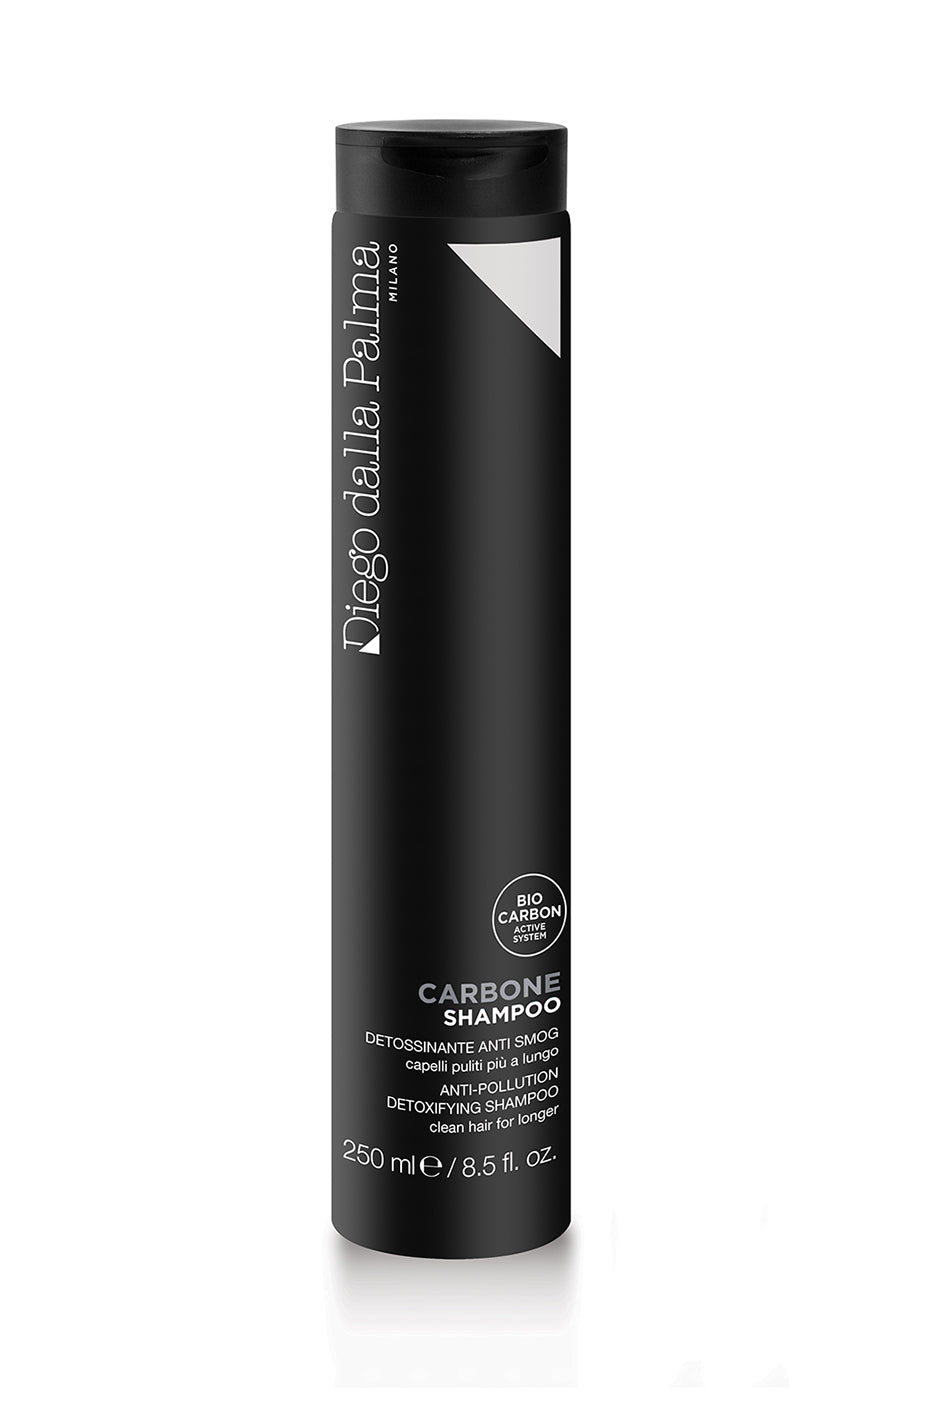 Linea Carbone - Shampoo Detossinante Anti-Smog - Profumeria Lauda